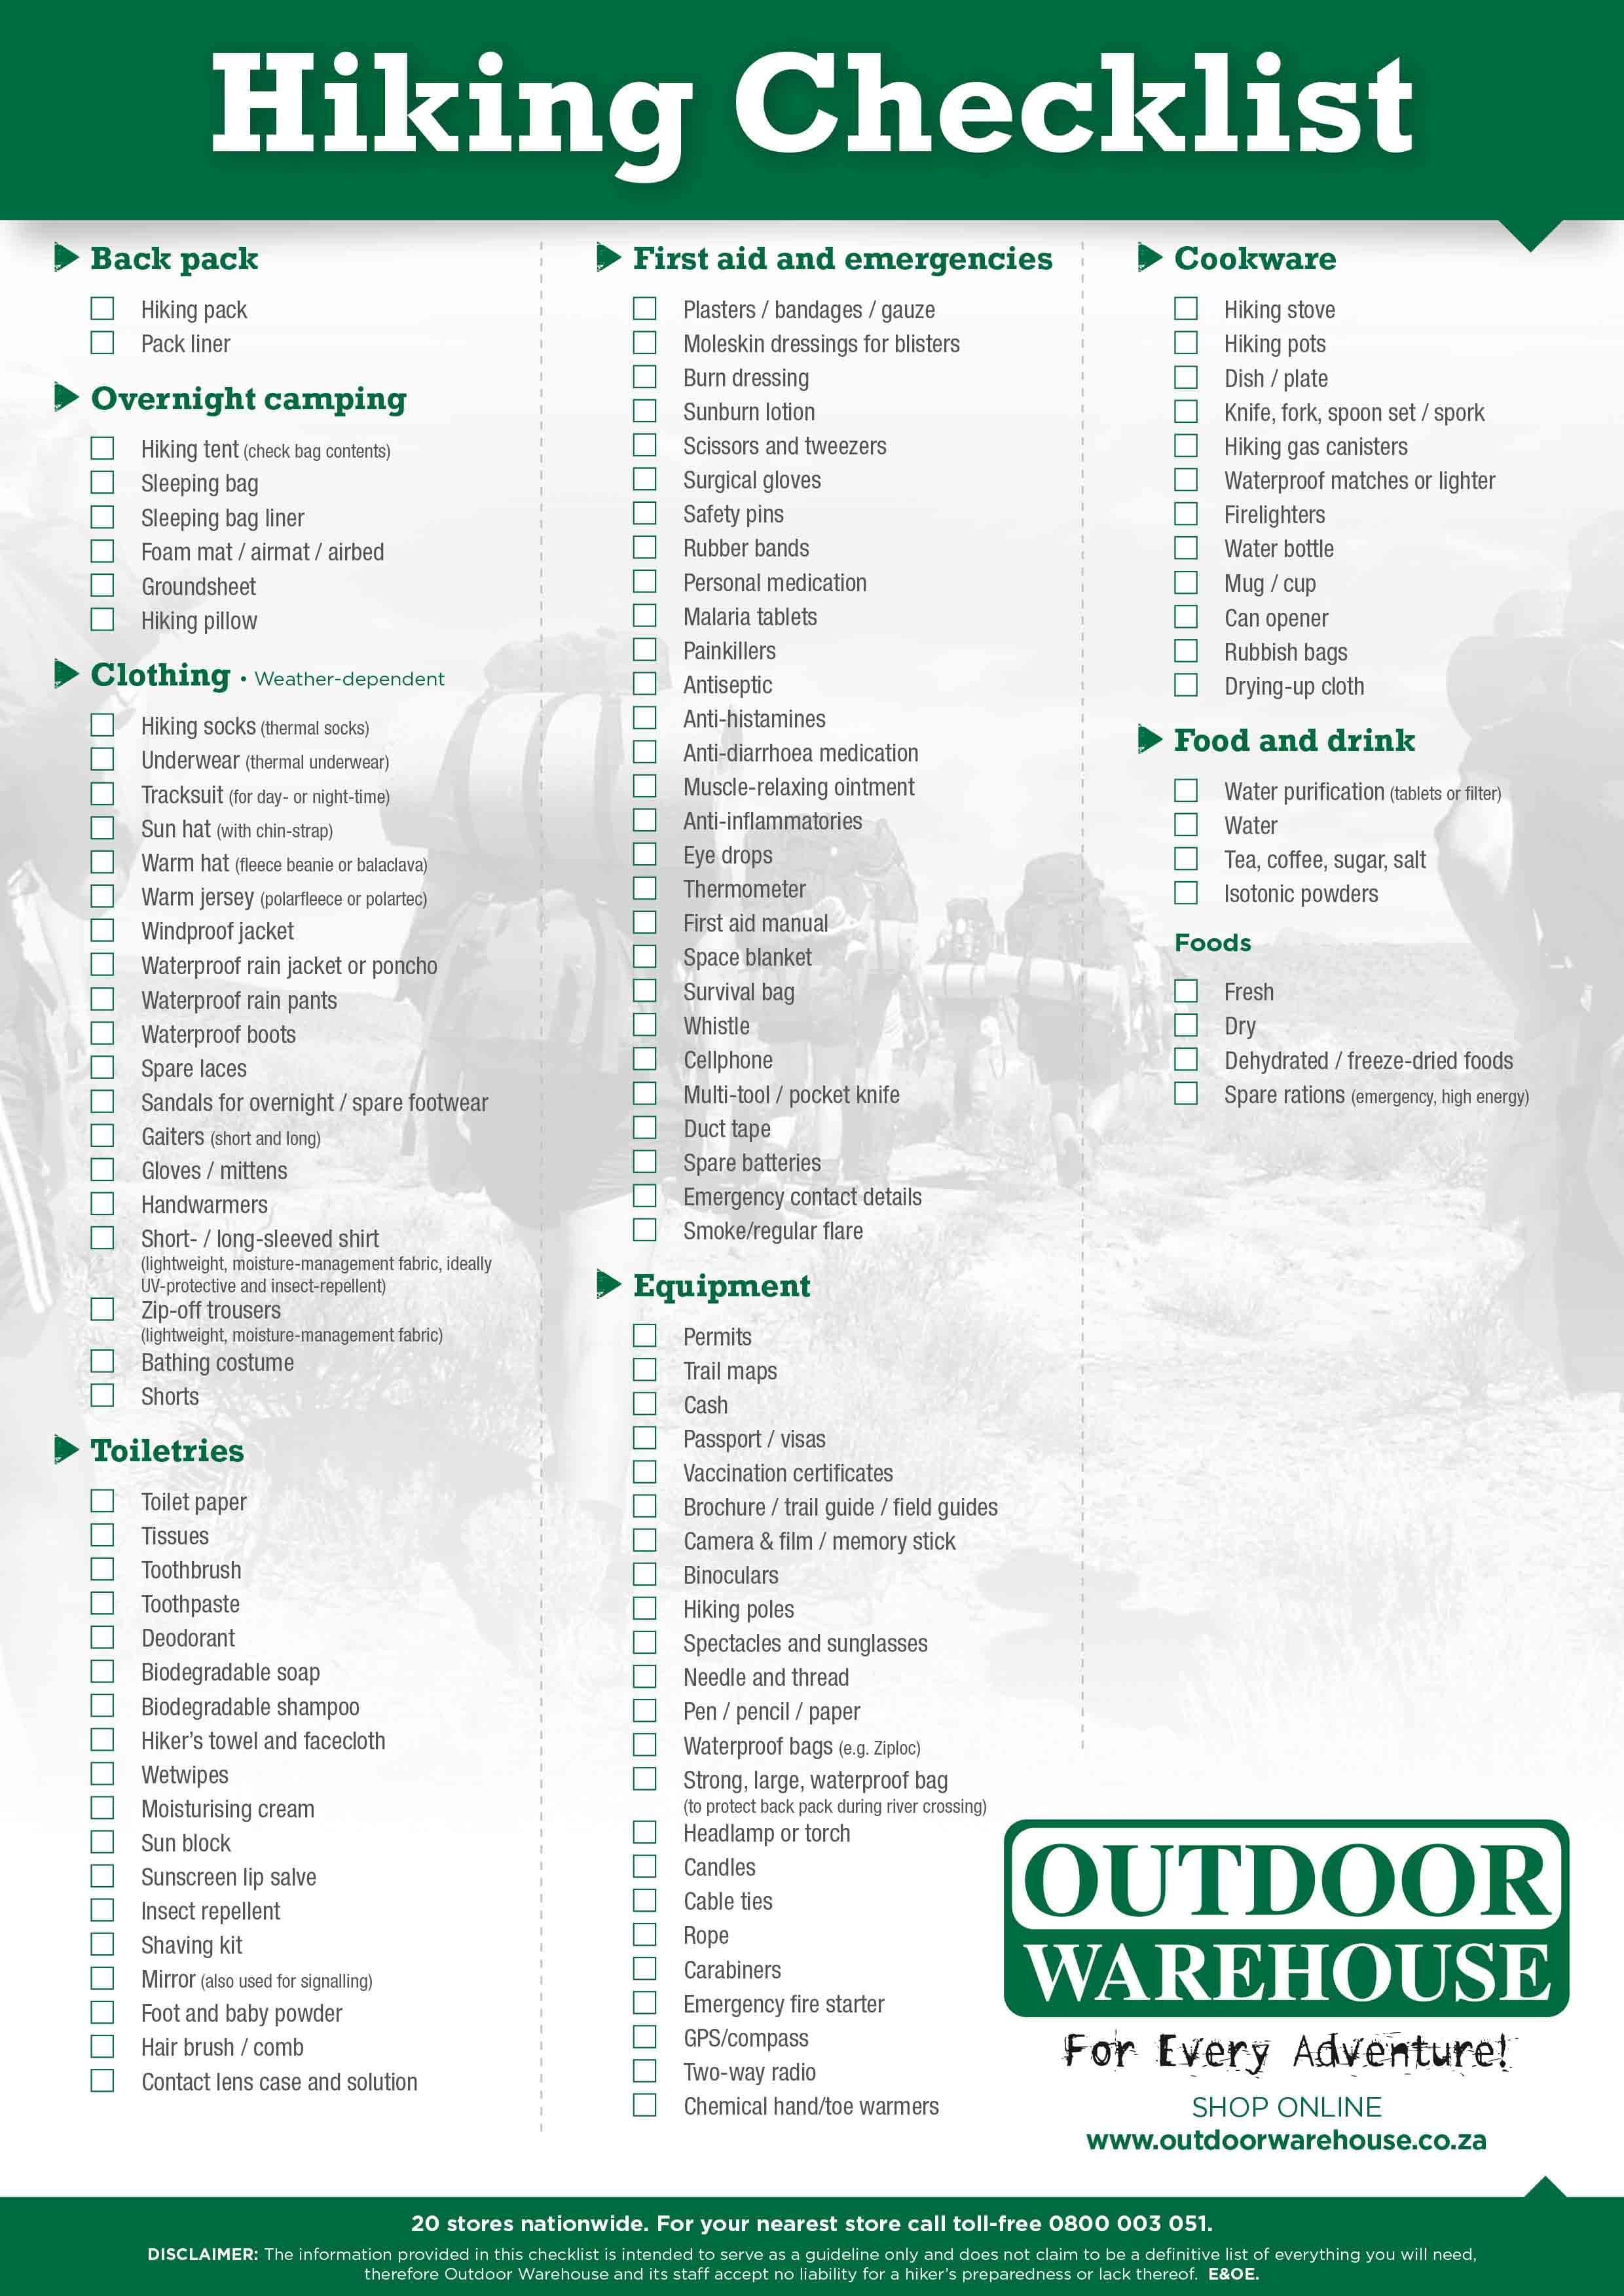 Hiking checklist